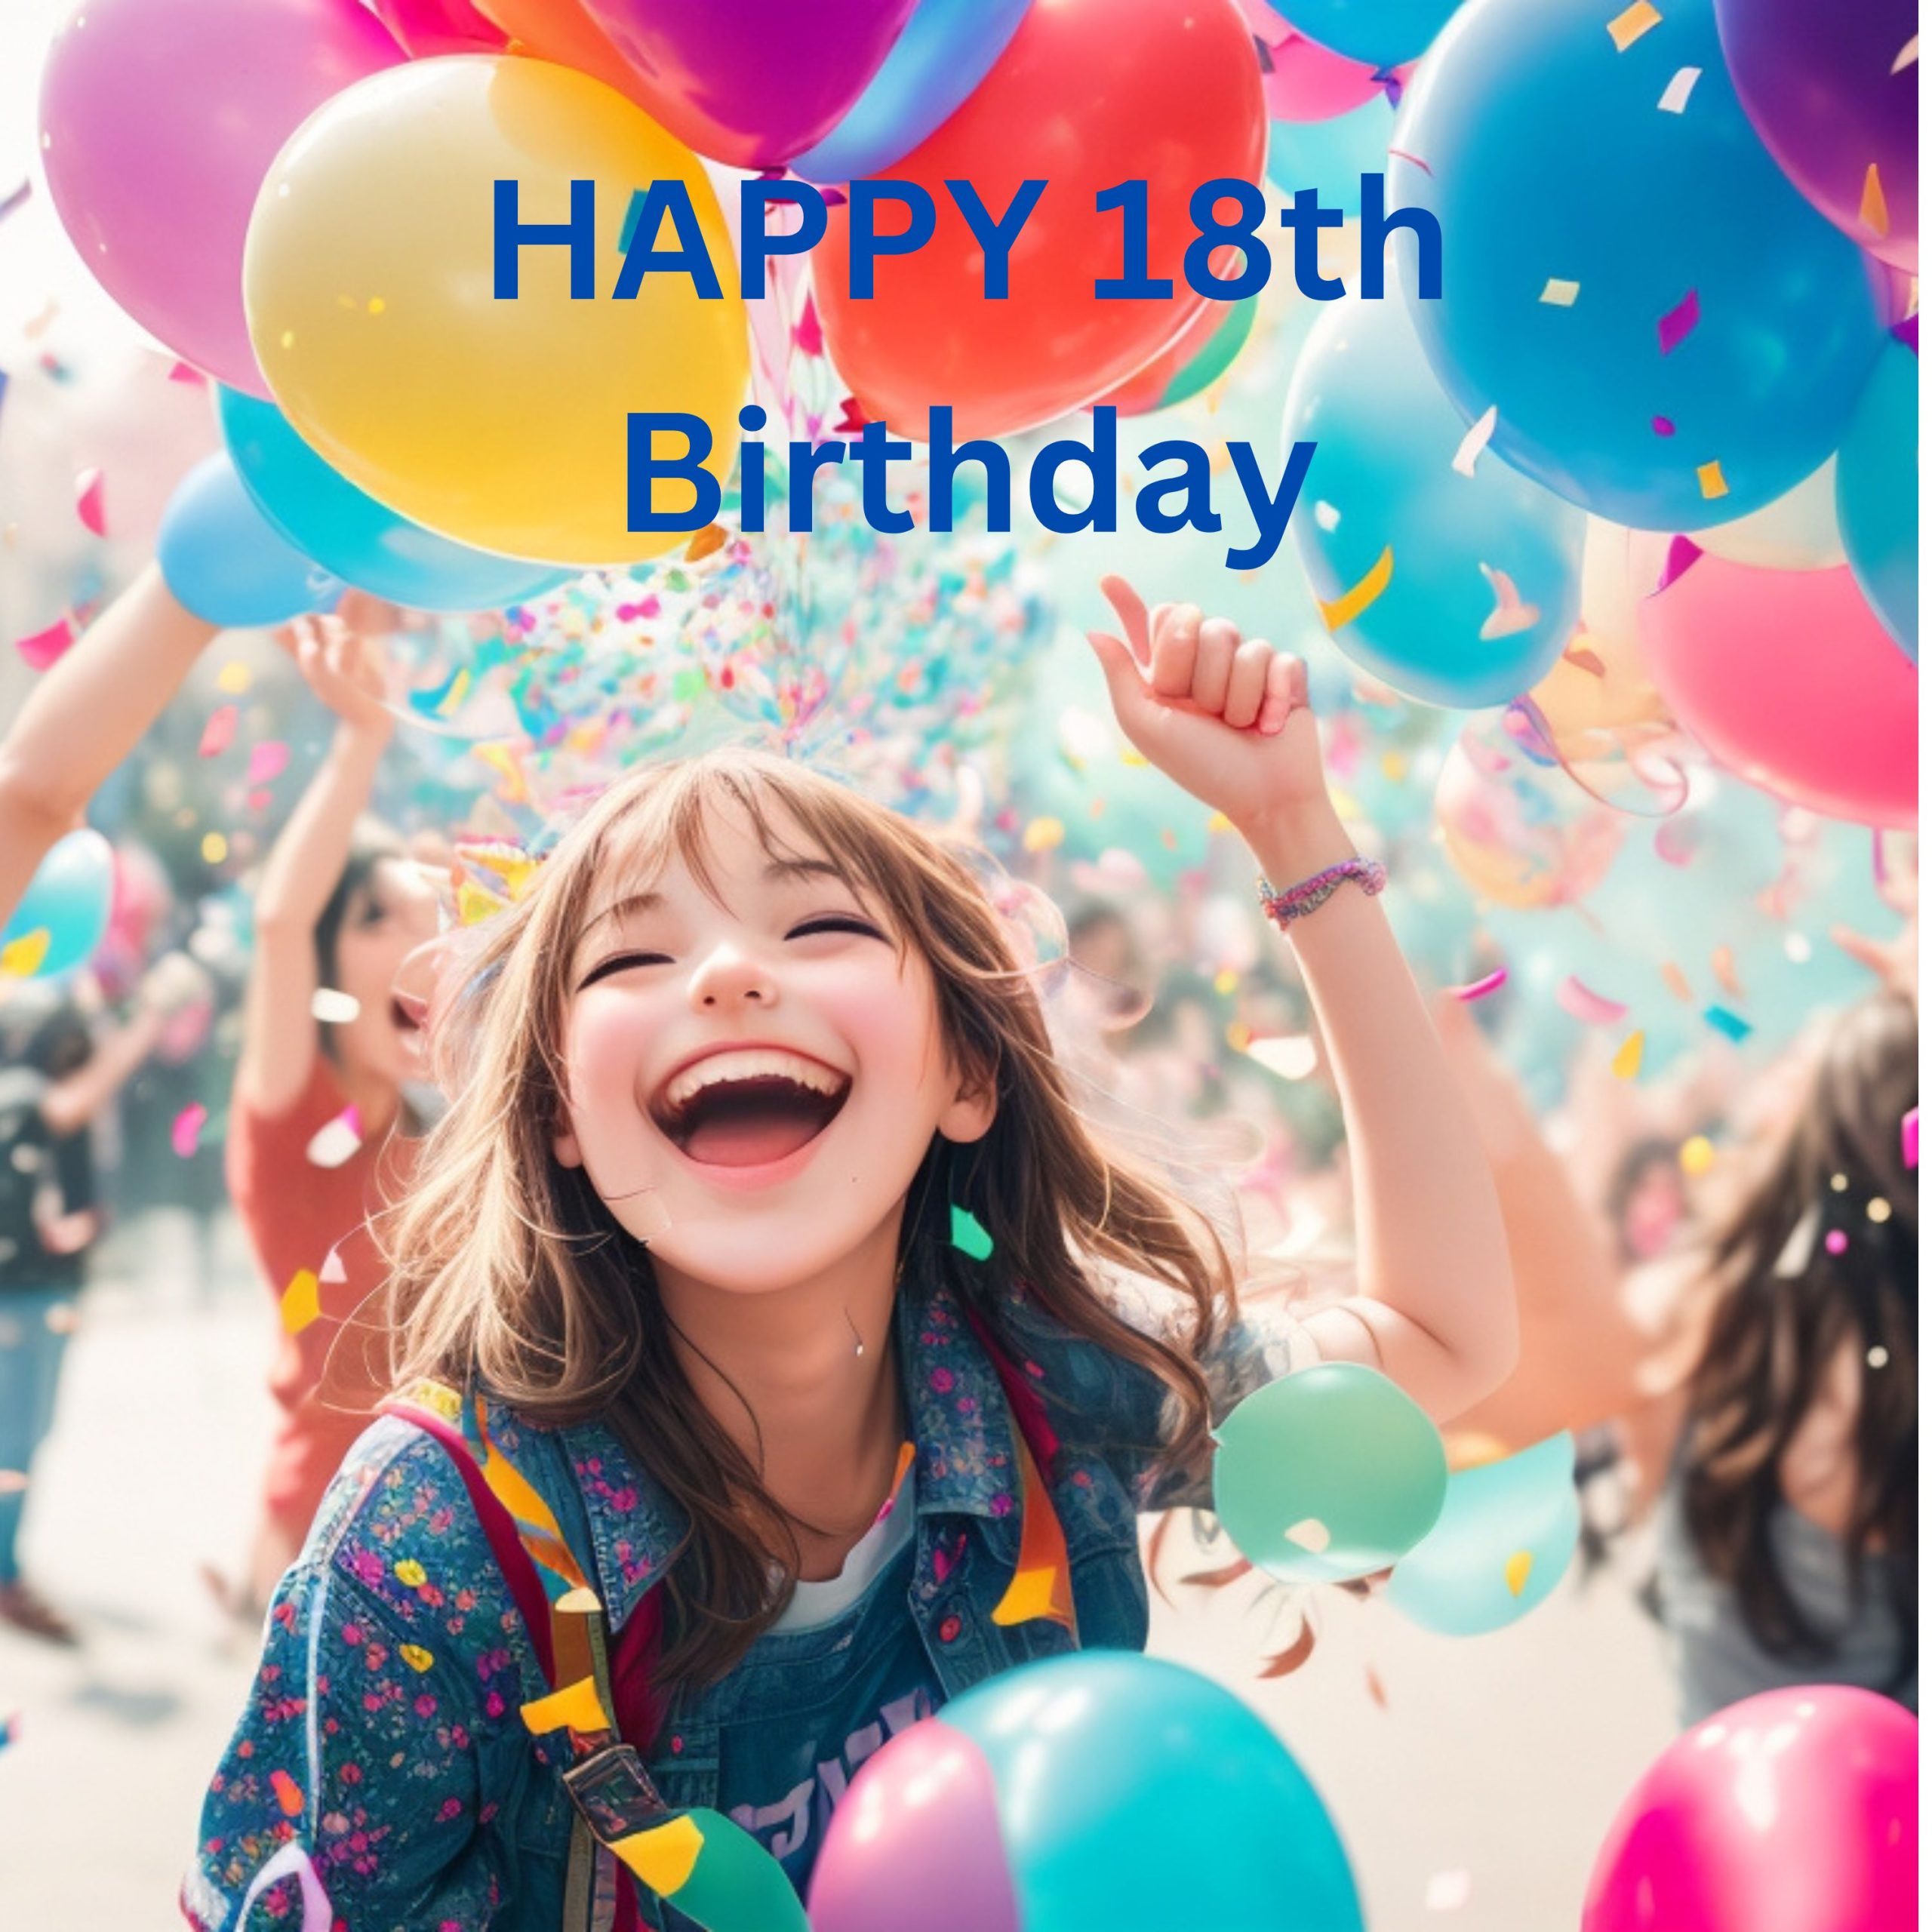 Happy 18th Birthday Wishes: Celebrating the Milestone of Adulthood